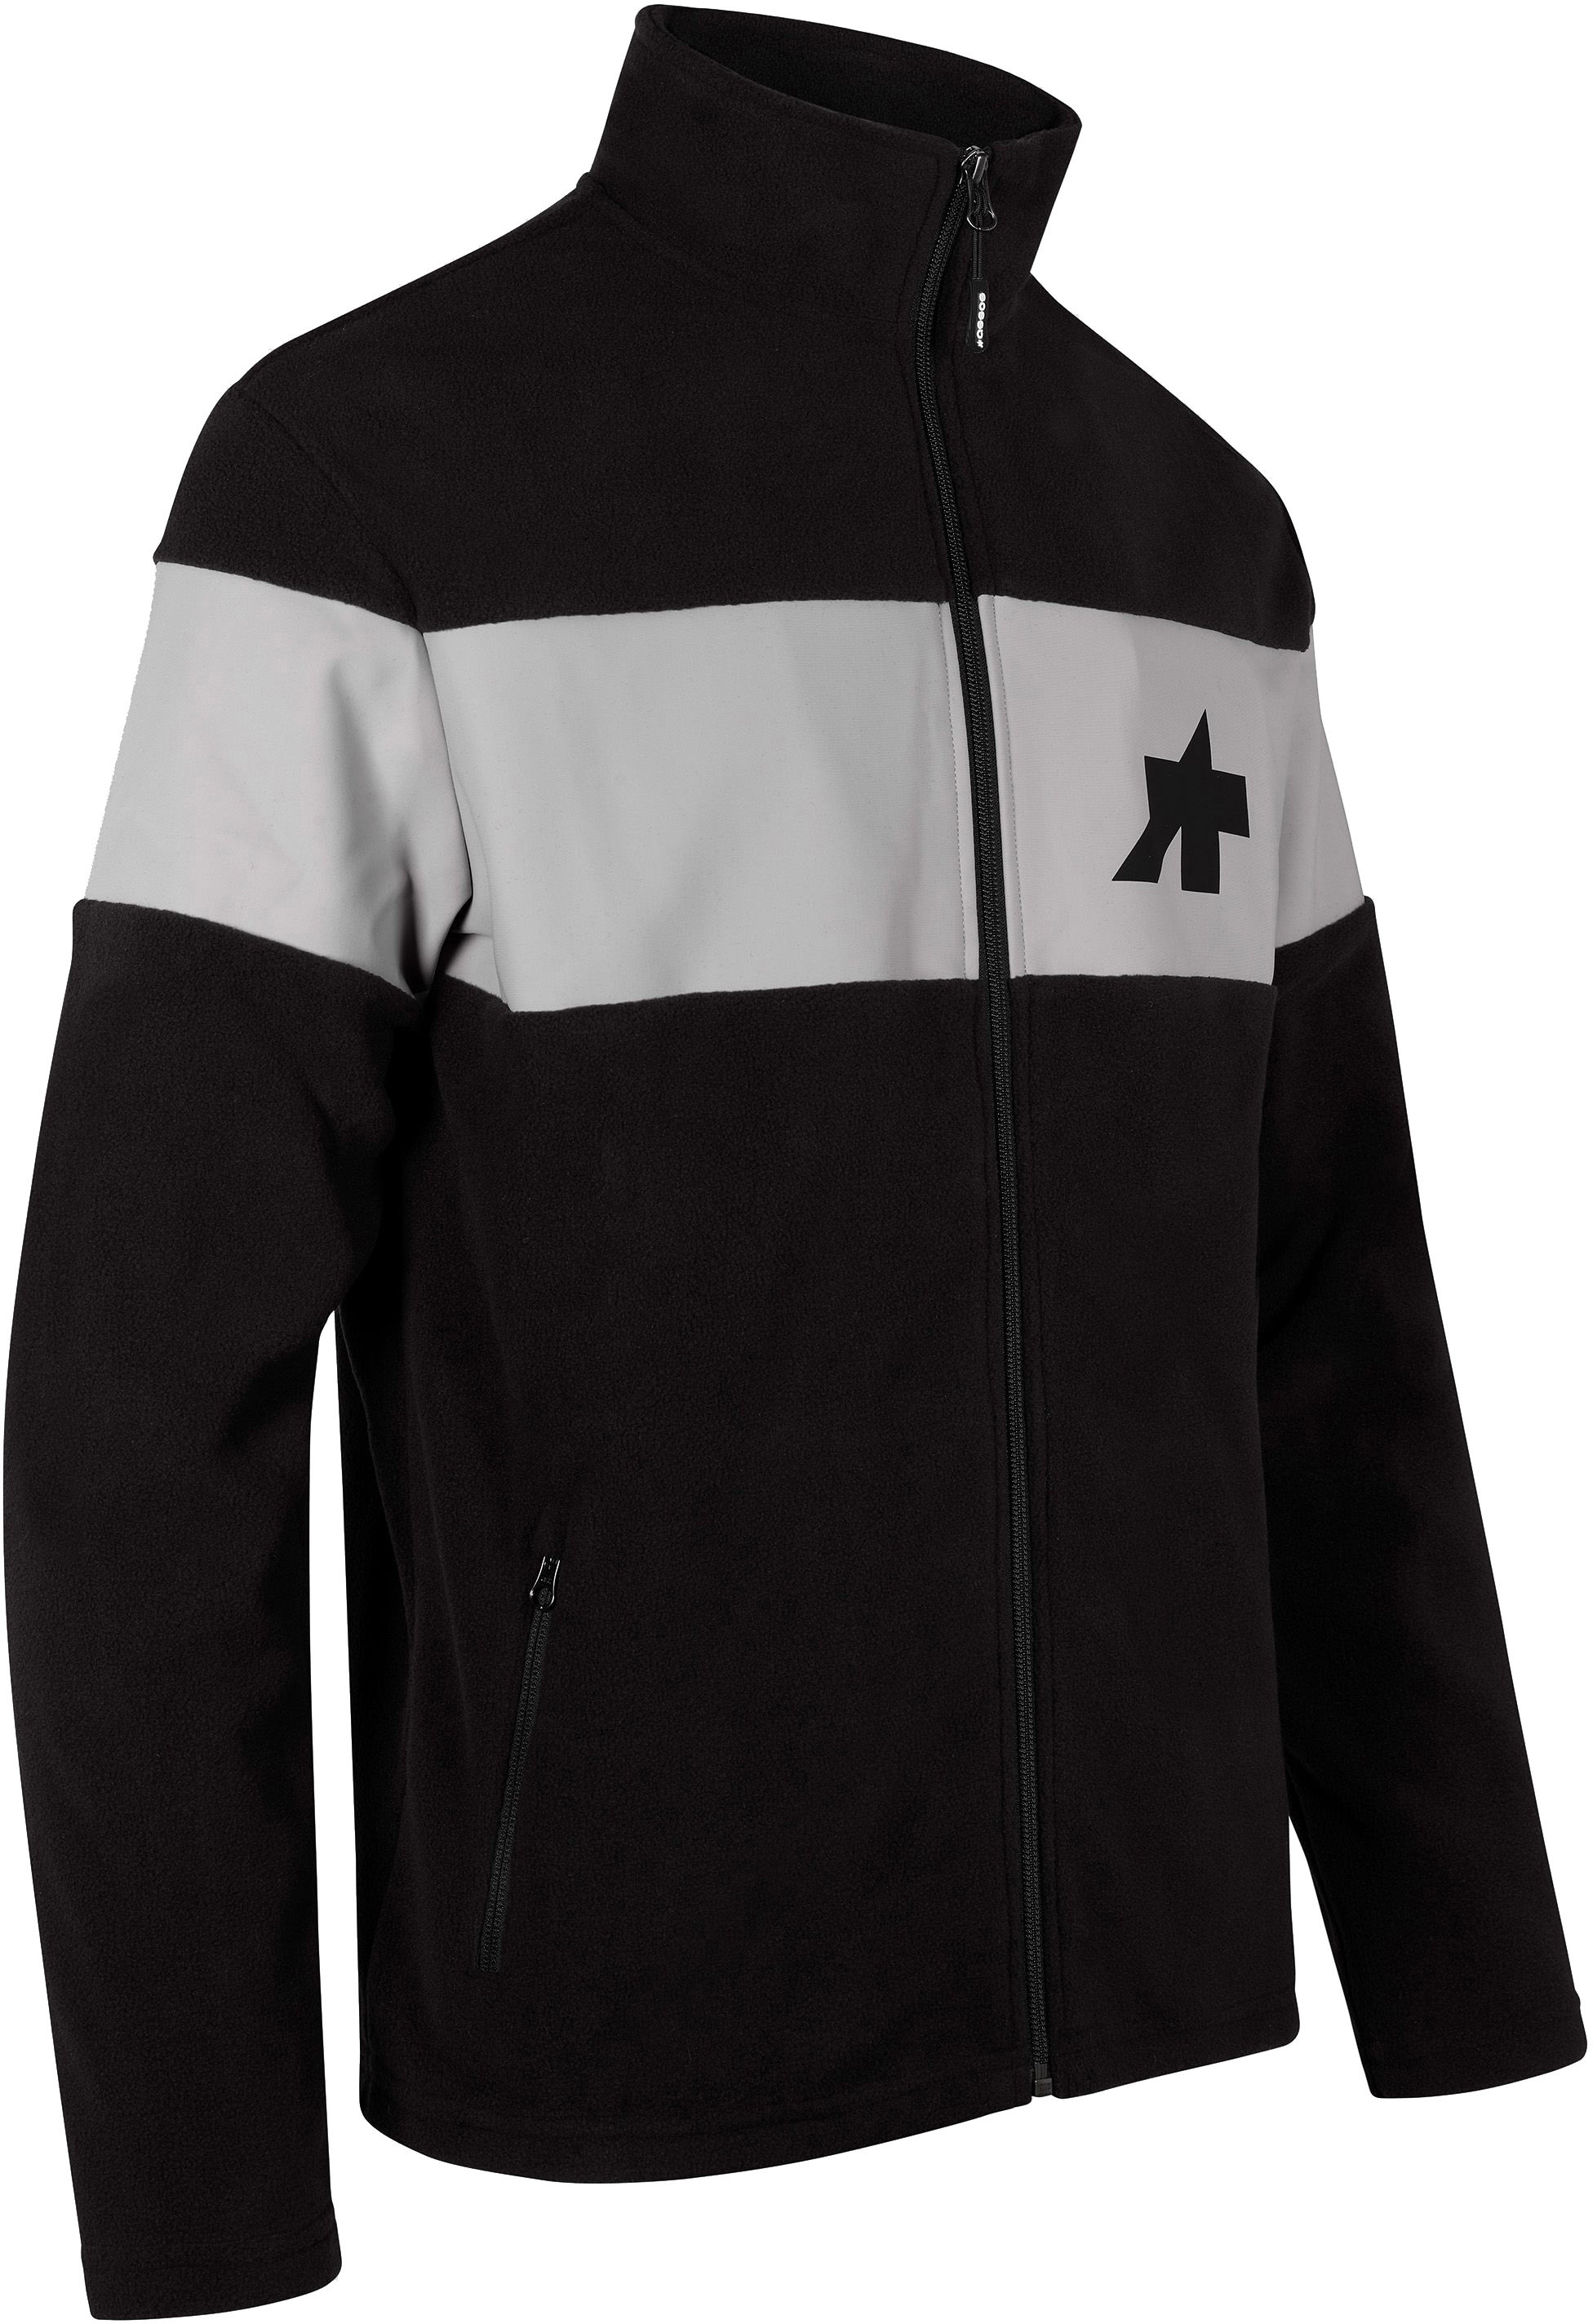 Beklædning - Merchandise - Assos SIGNATURE Sweater - Sort